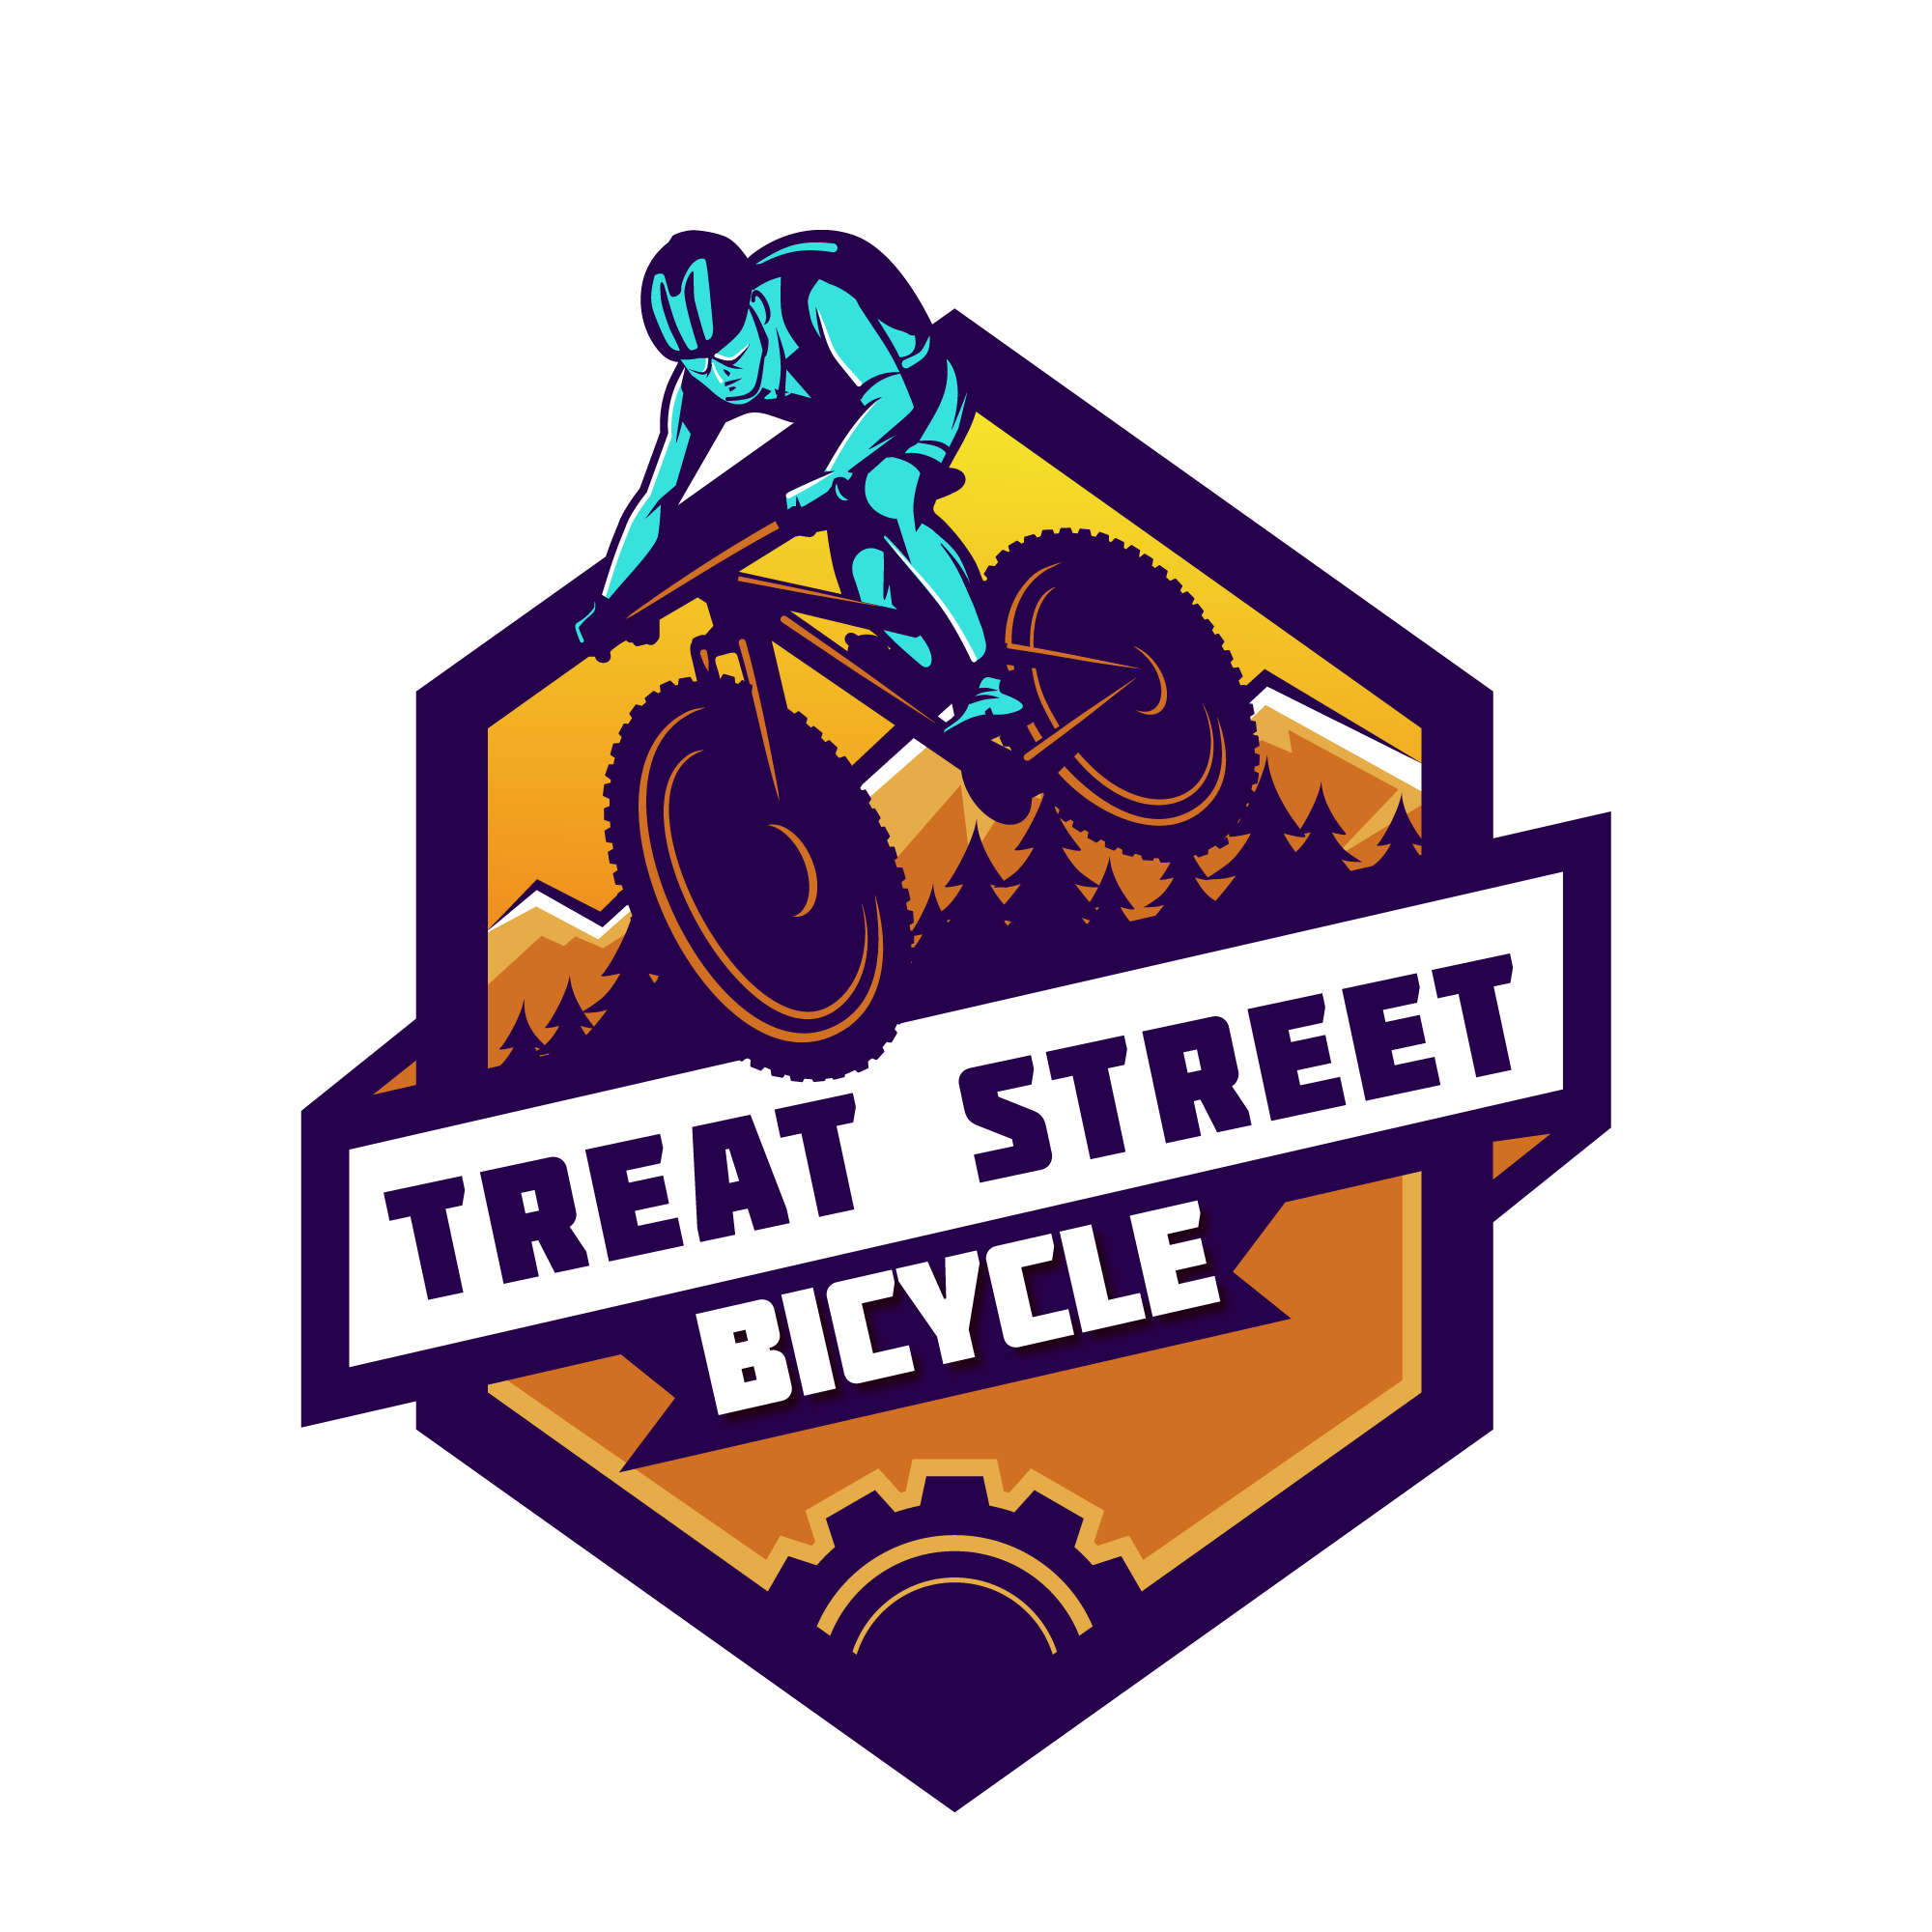 Treat Street Bicycle